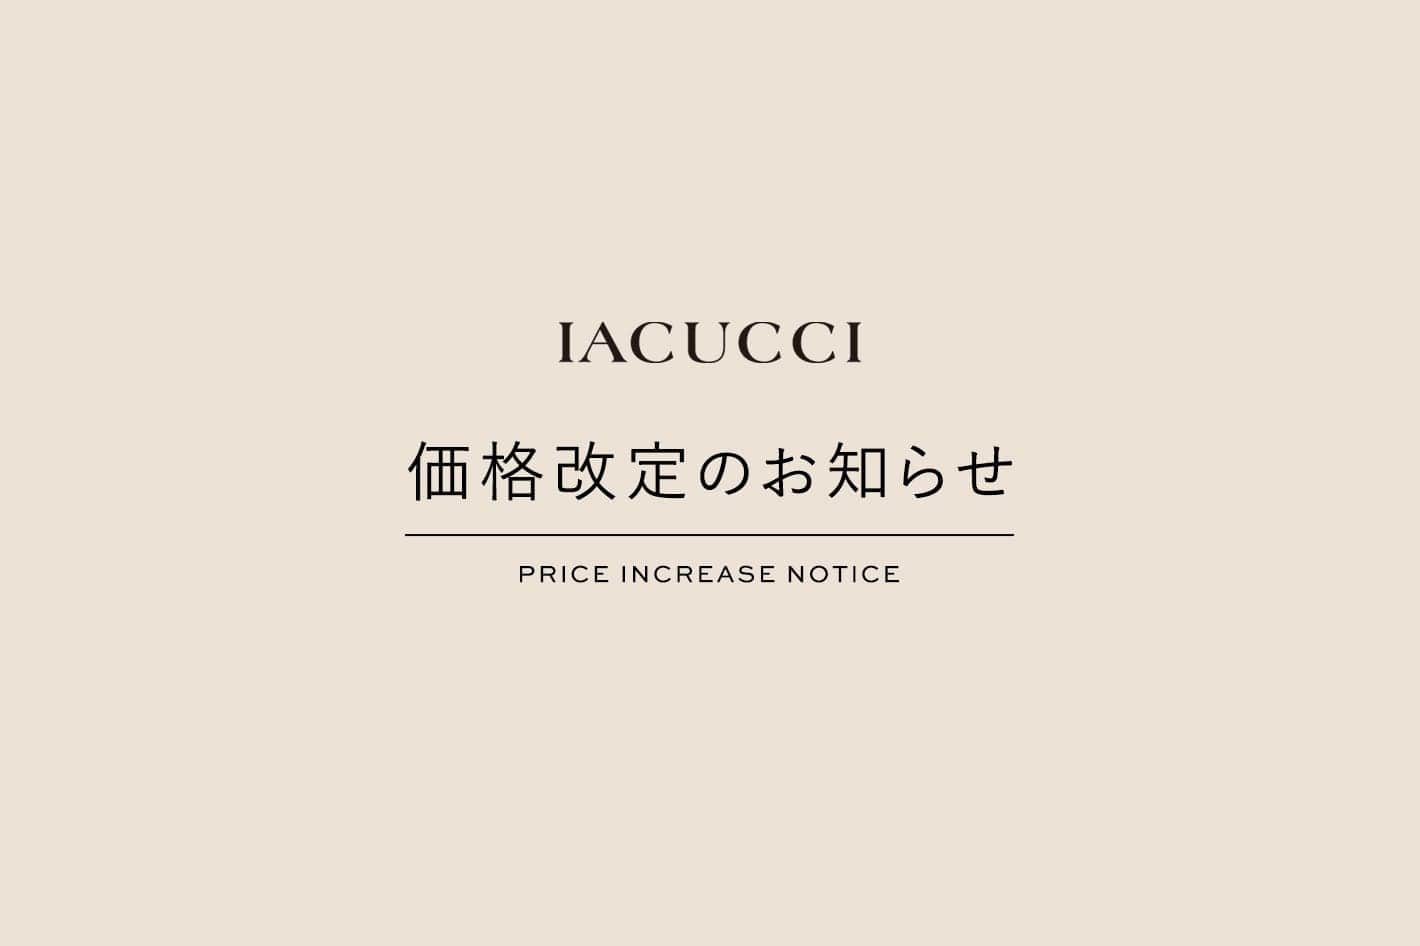 IACUCCI 価格改定のお知らせ